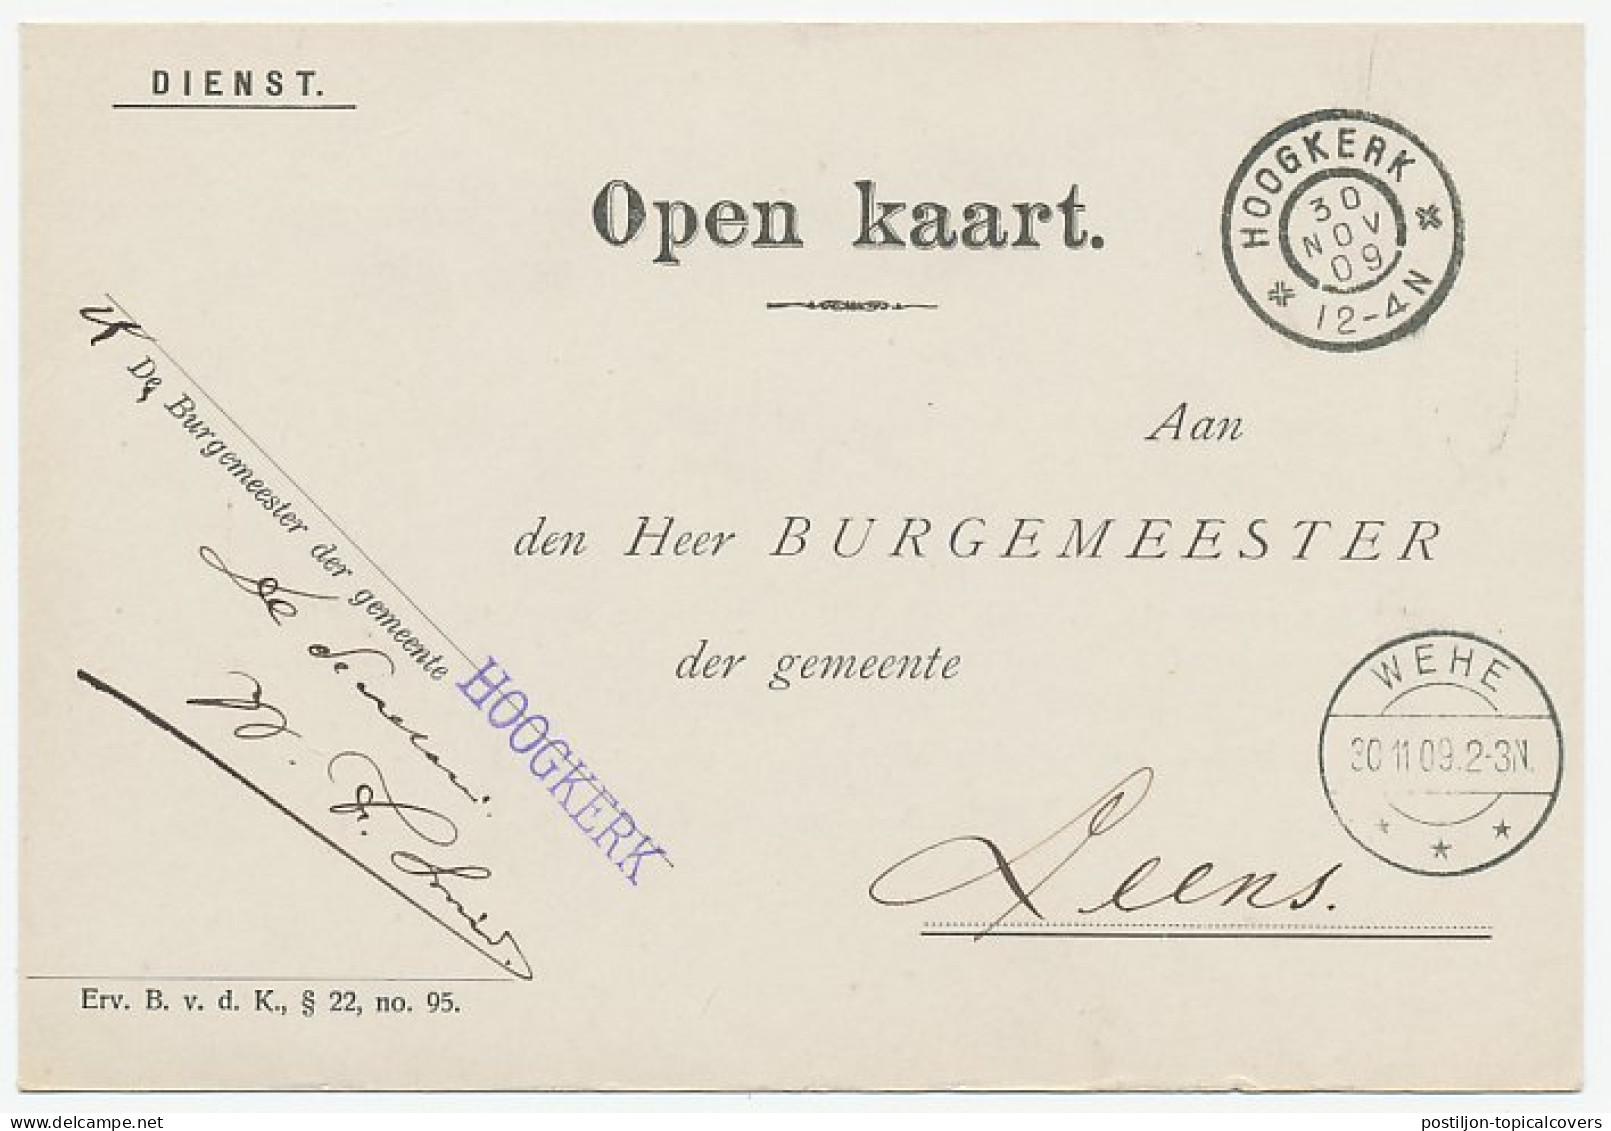 Grootrondstempel Hoogkerk 1909  - Ohne Zuordnung